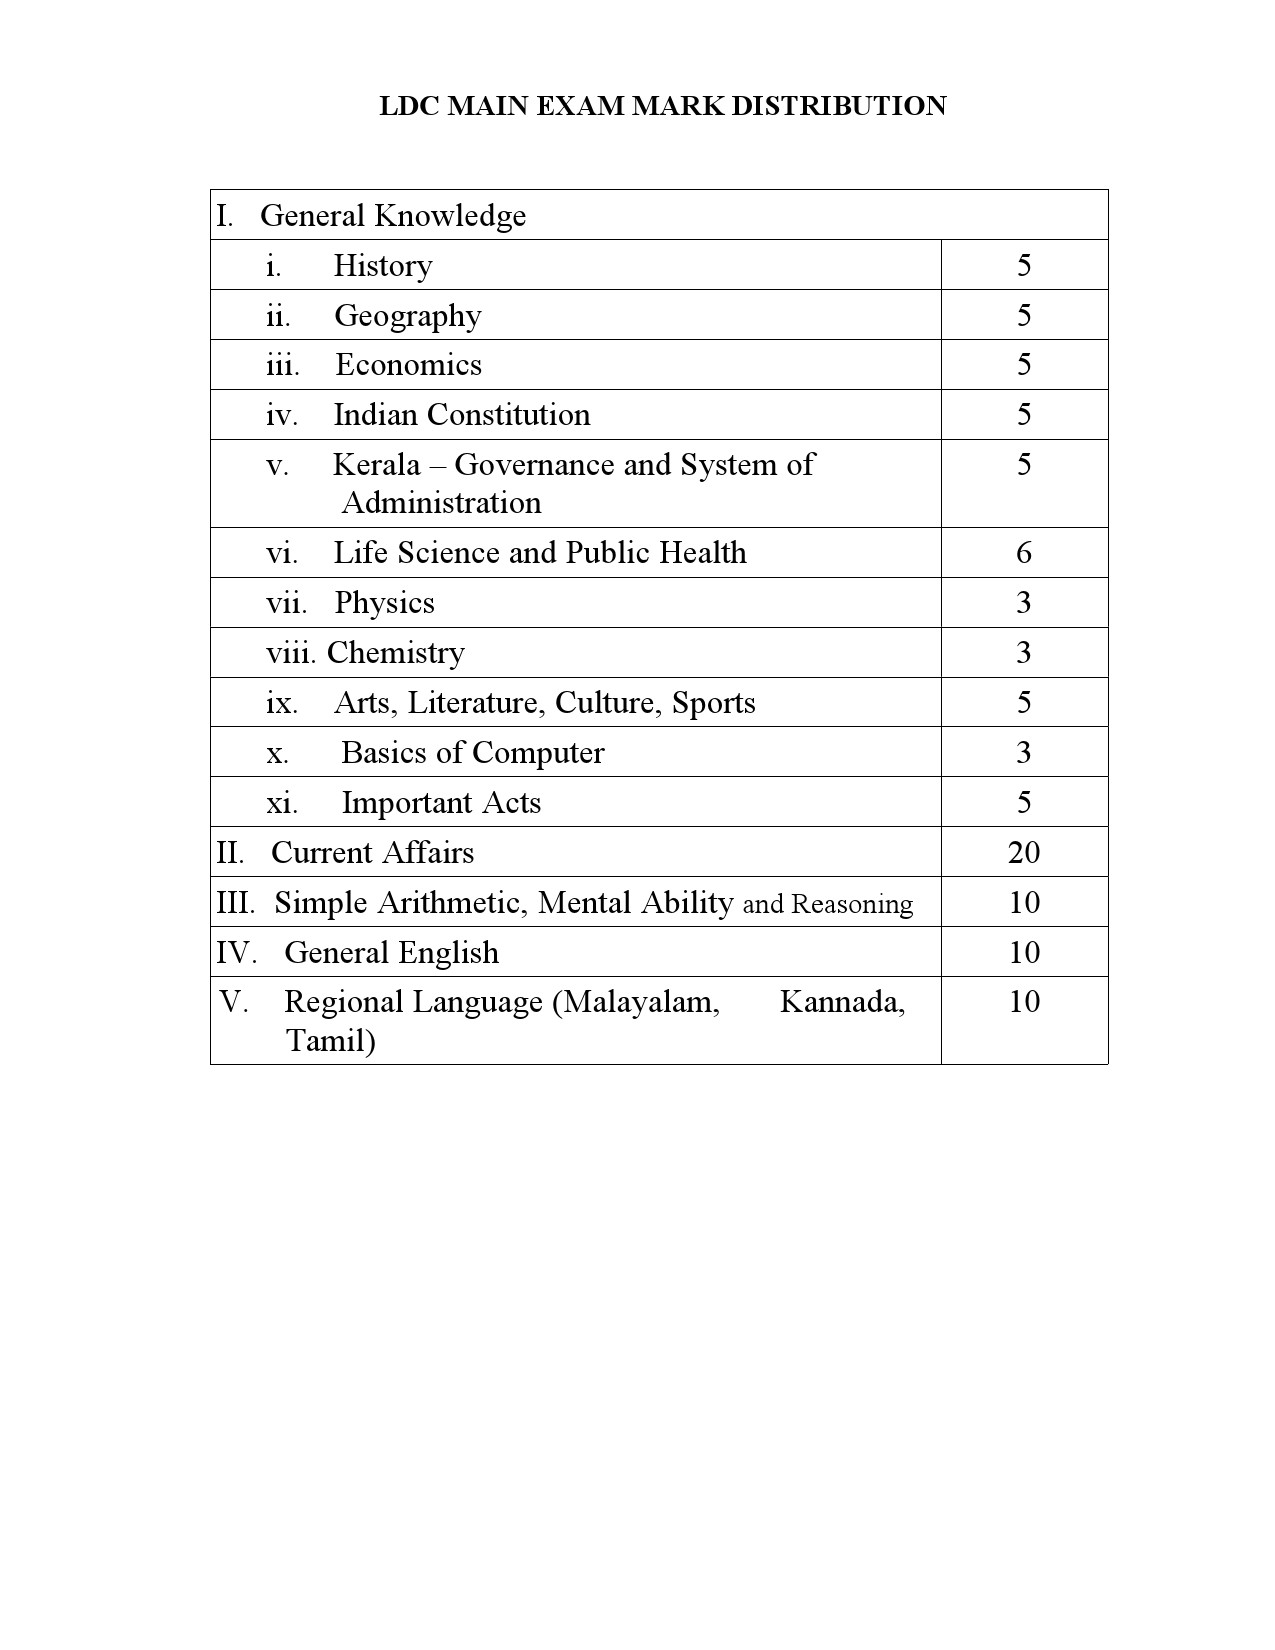 LDC Main Exam Syllabus Malayalam And English - Notification Image 14